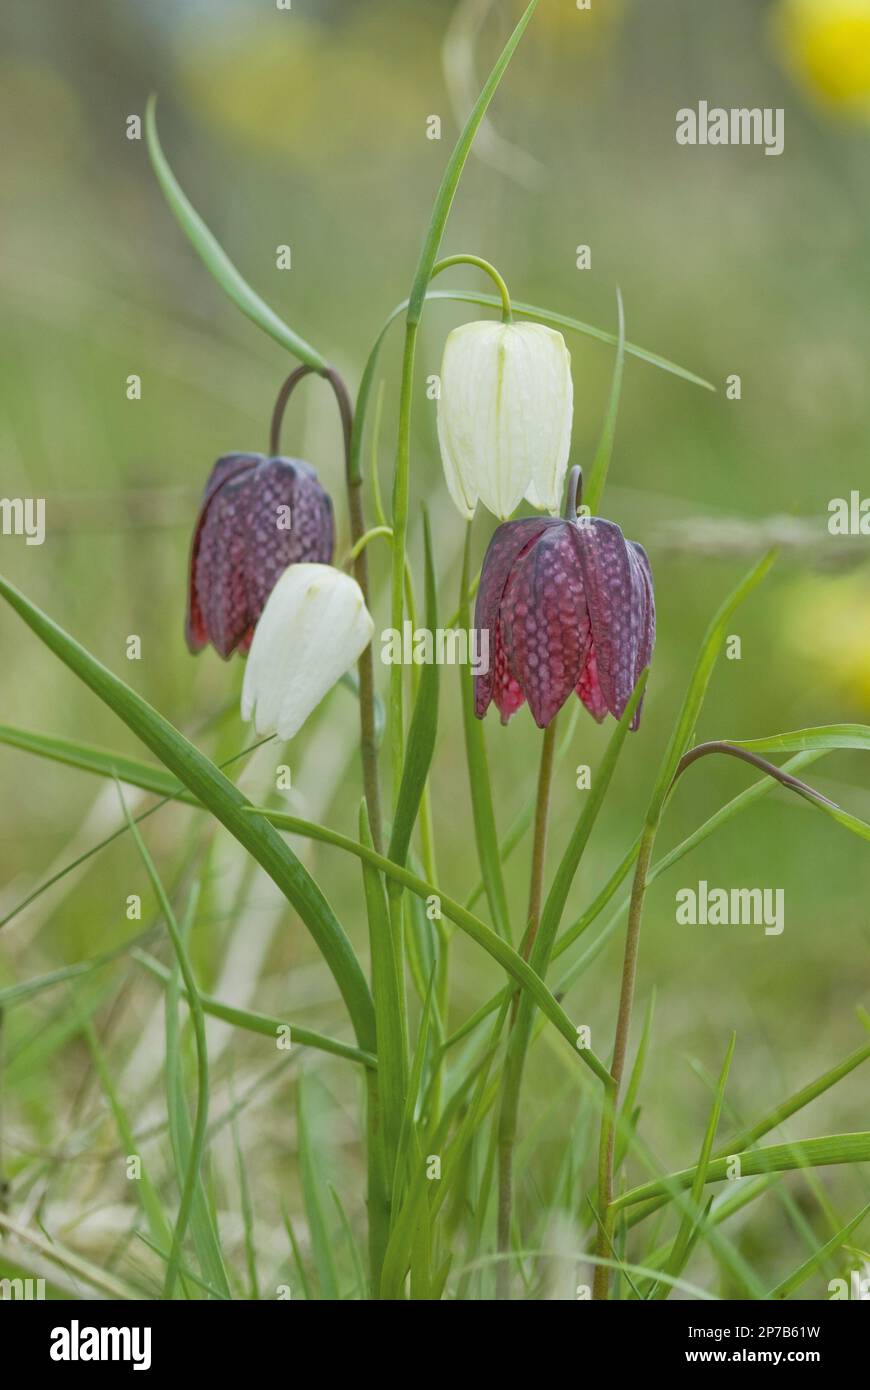 Fritillaria meleagris testa di serpente viola e fiori bianchi tesselated annoding bulbi primavera campana Foto Stock